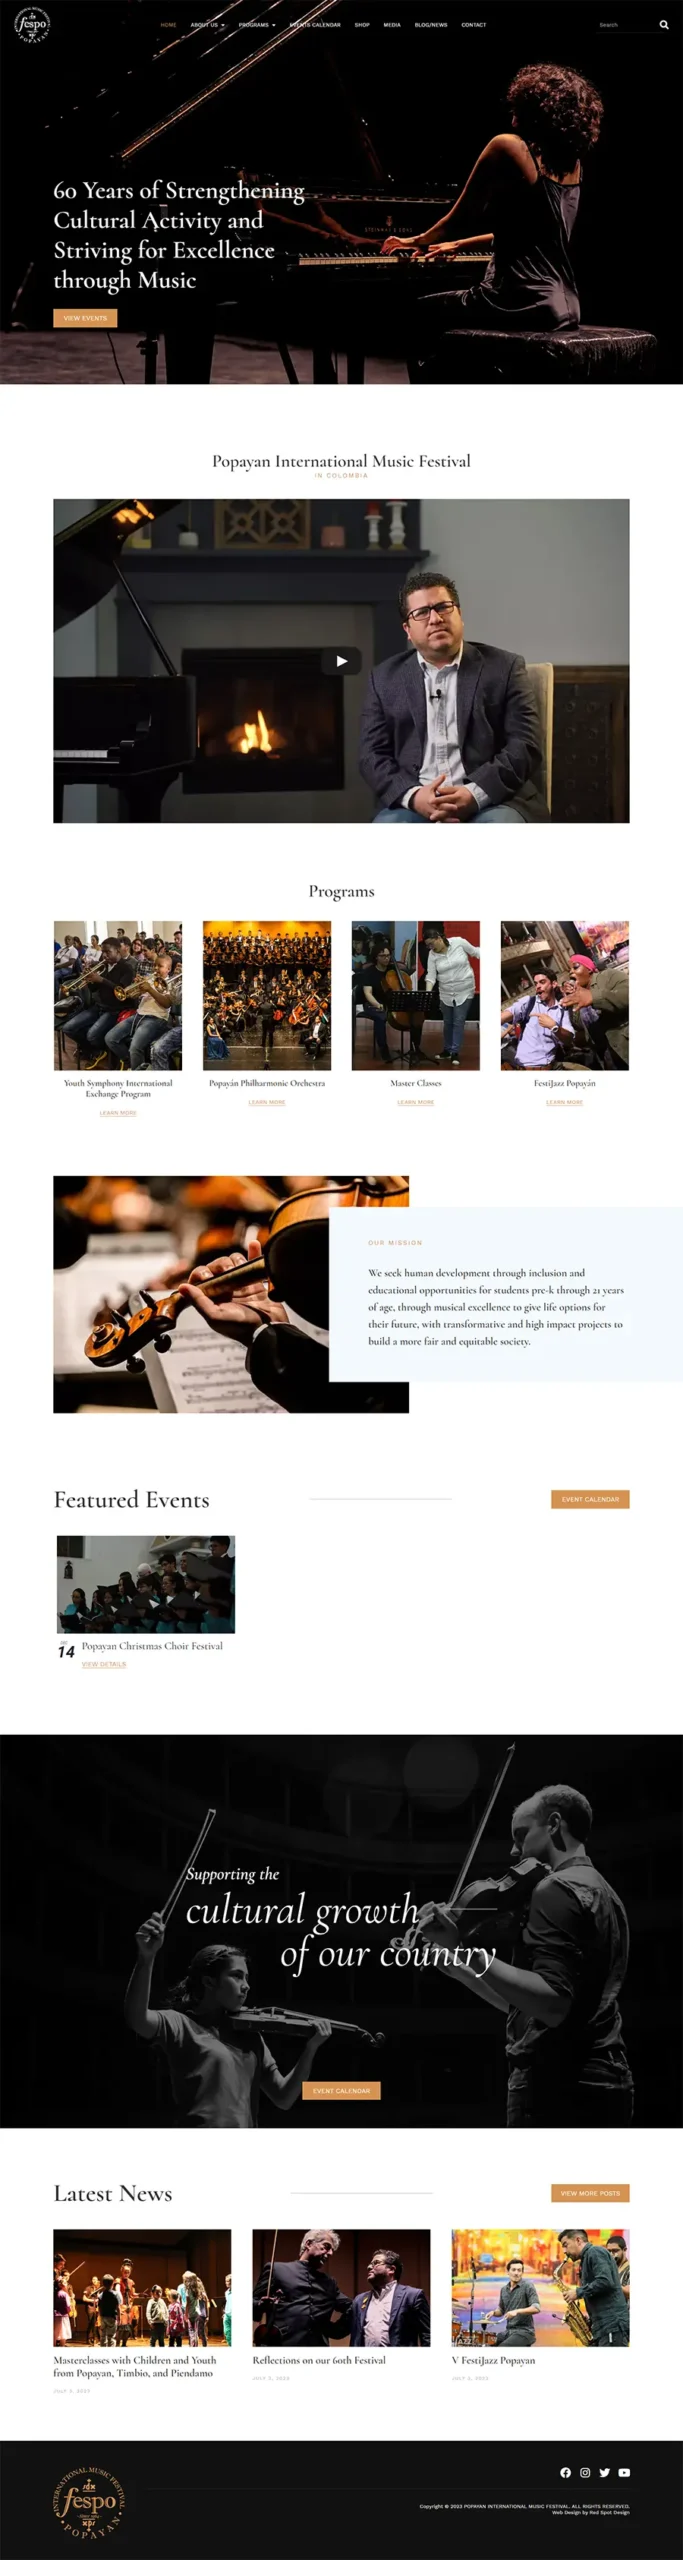 wordpress web design for Popayan International Music Festival